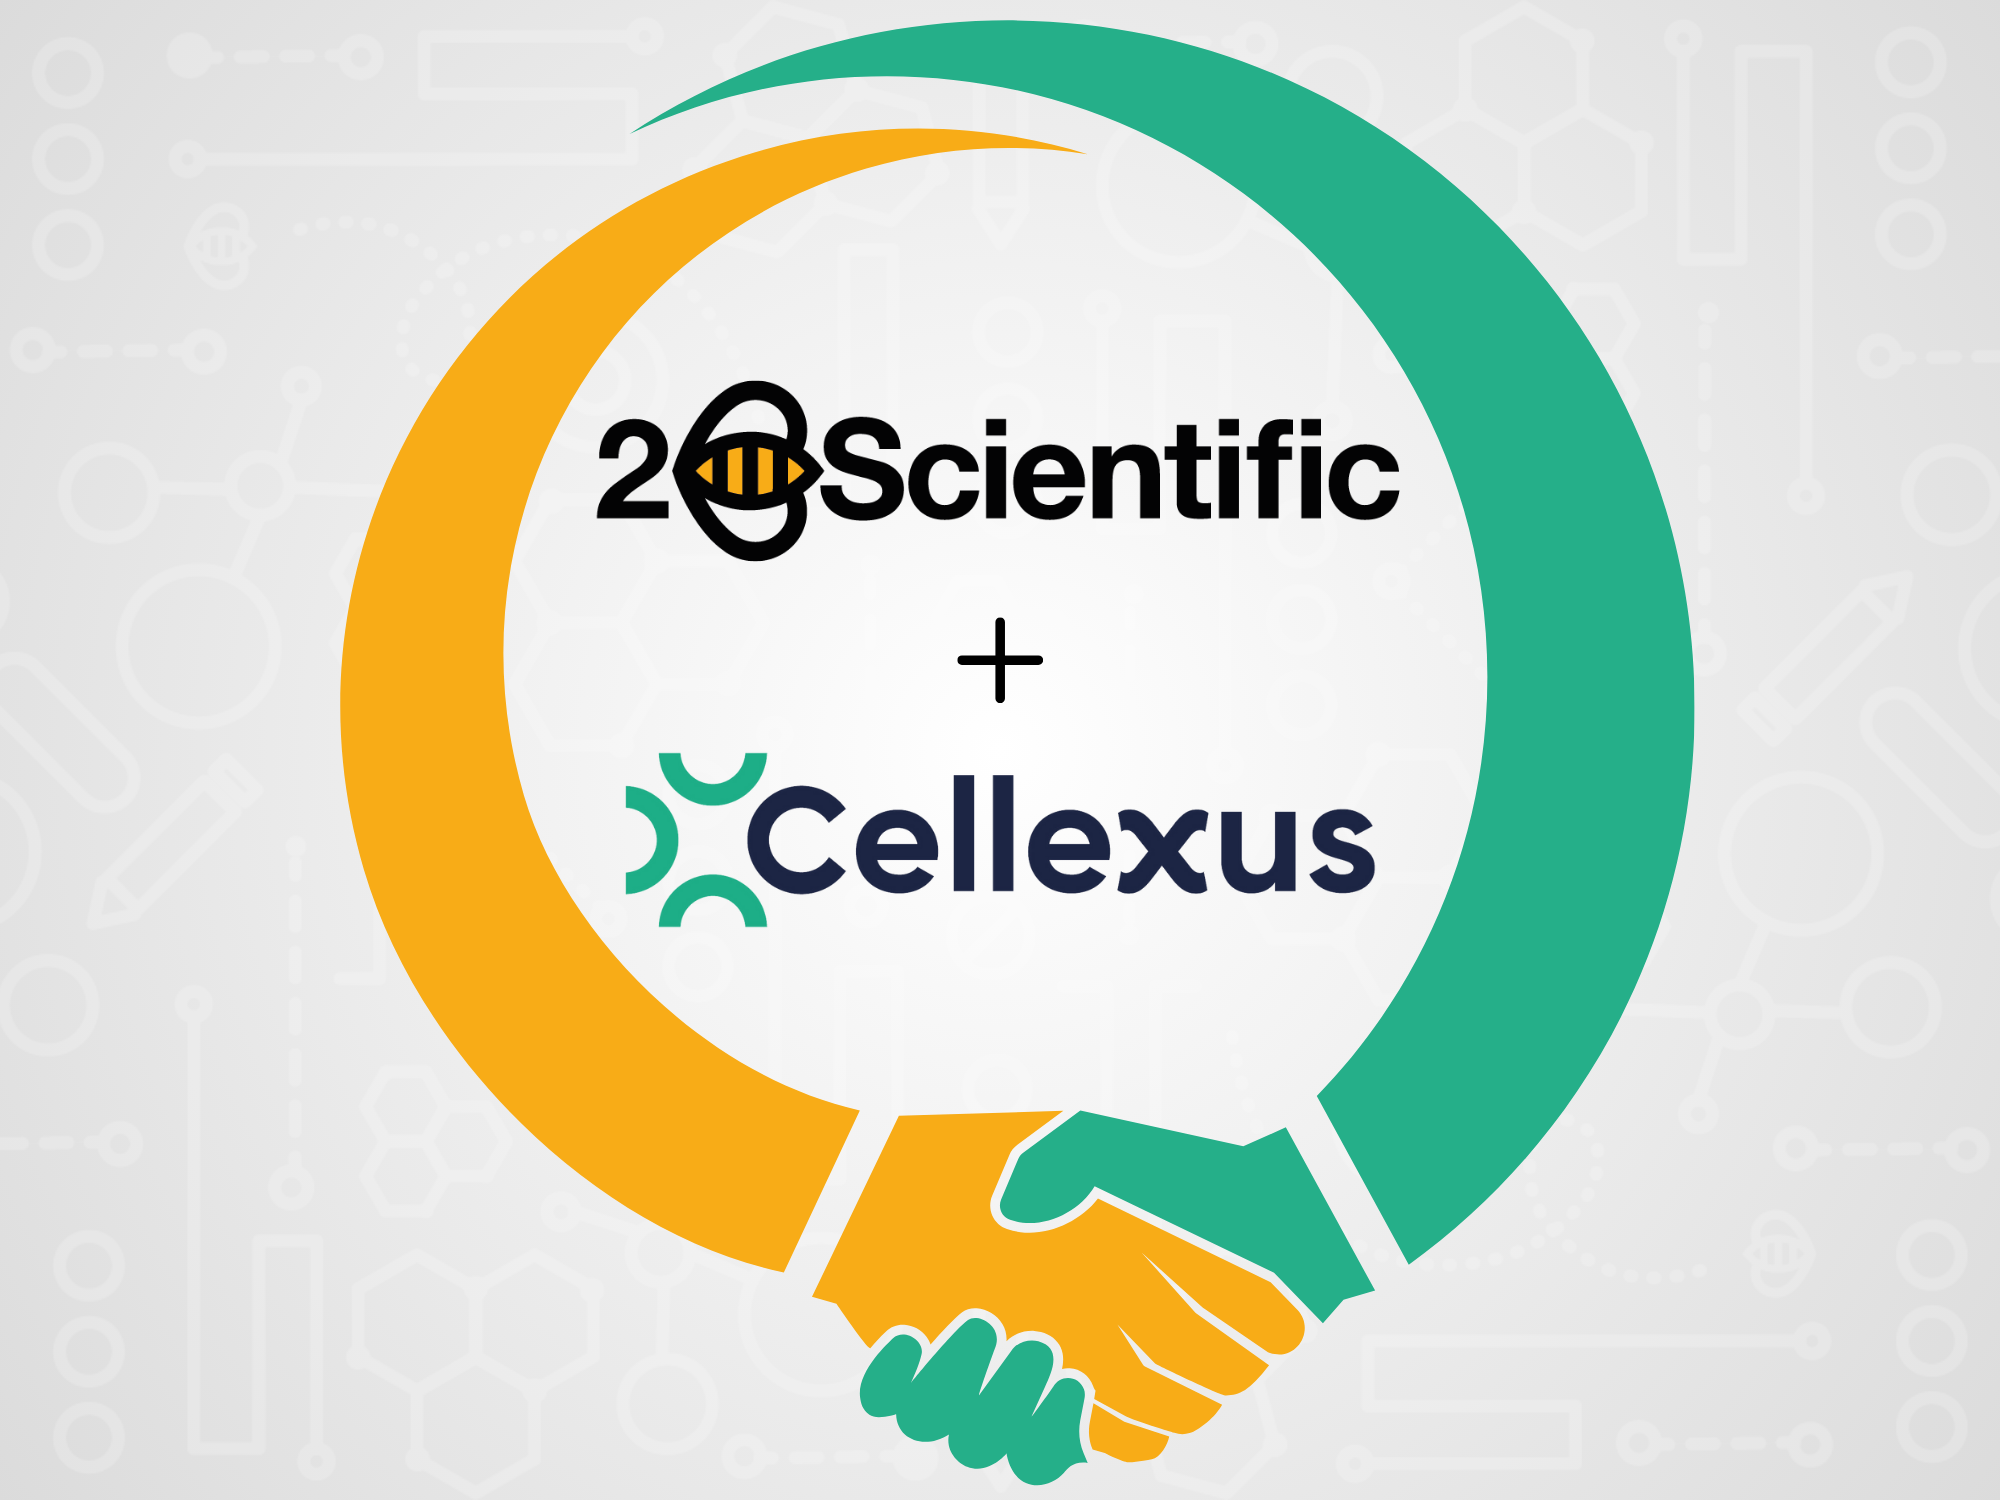 2BScientific invests into Cellexus International Limited